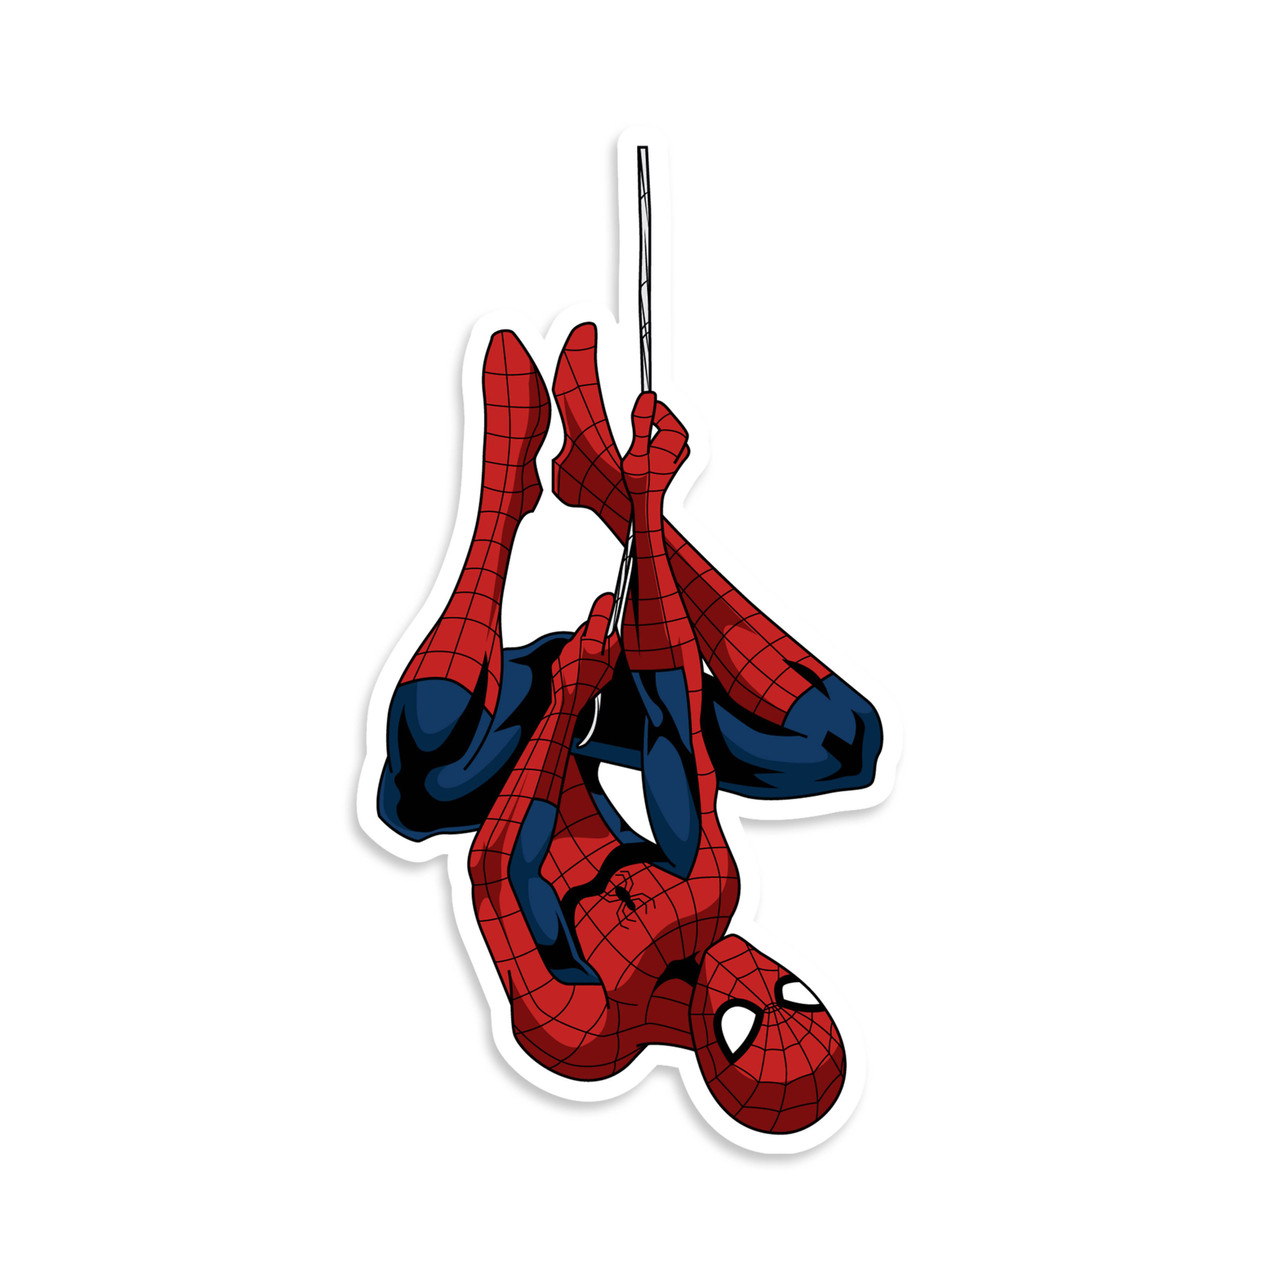 Spiderman 3D Comic PVC Morale Patch - NEO Tactical Gear